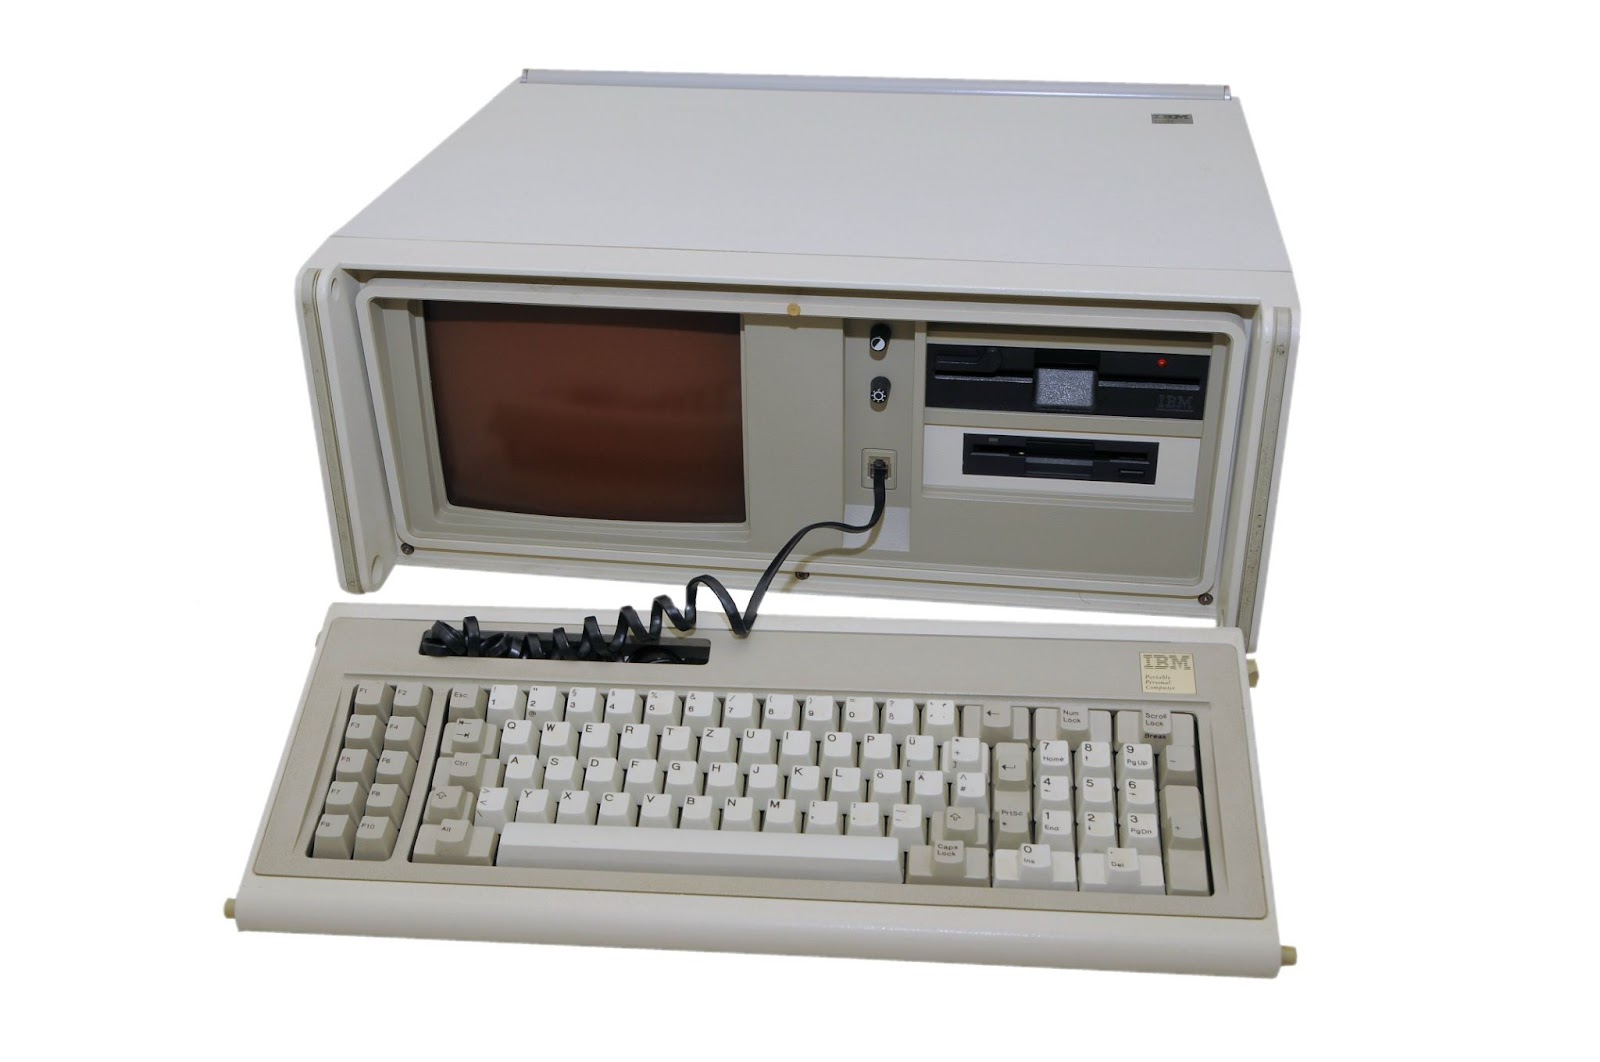 IBM Portable Personal Computer